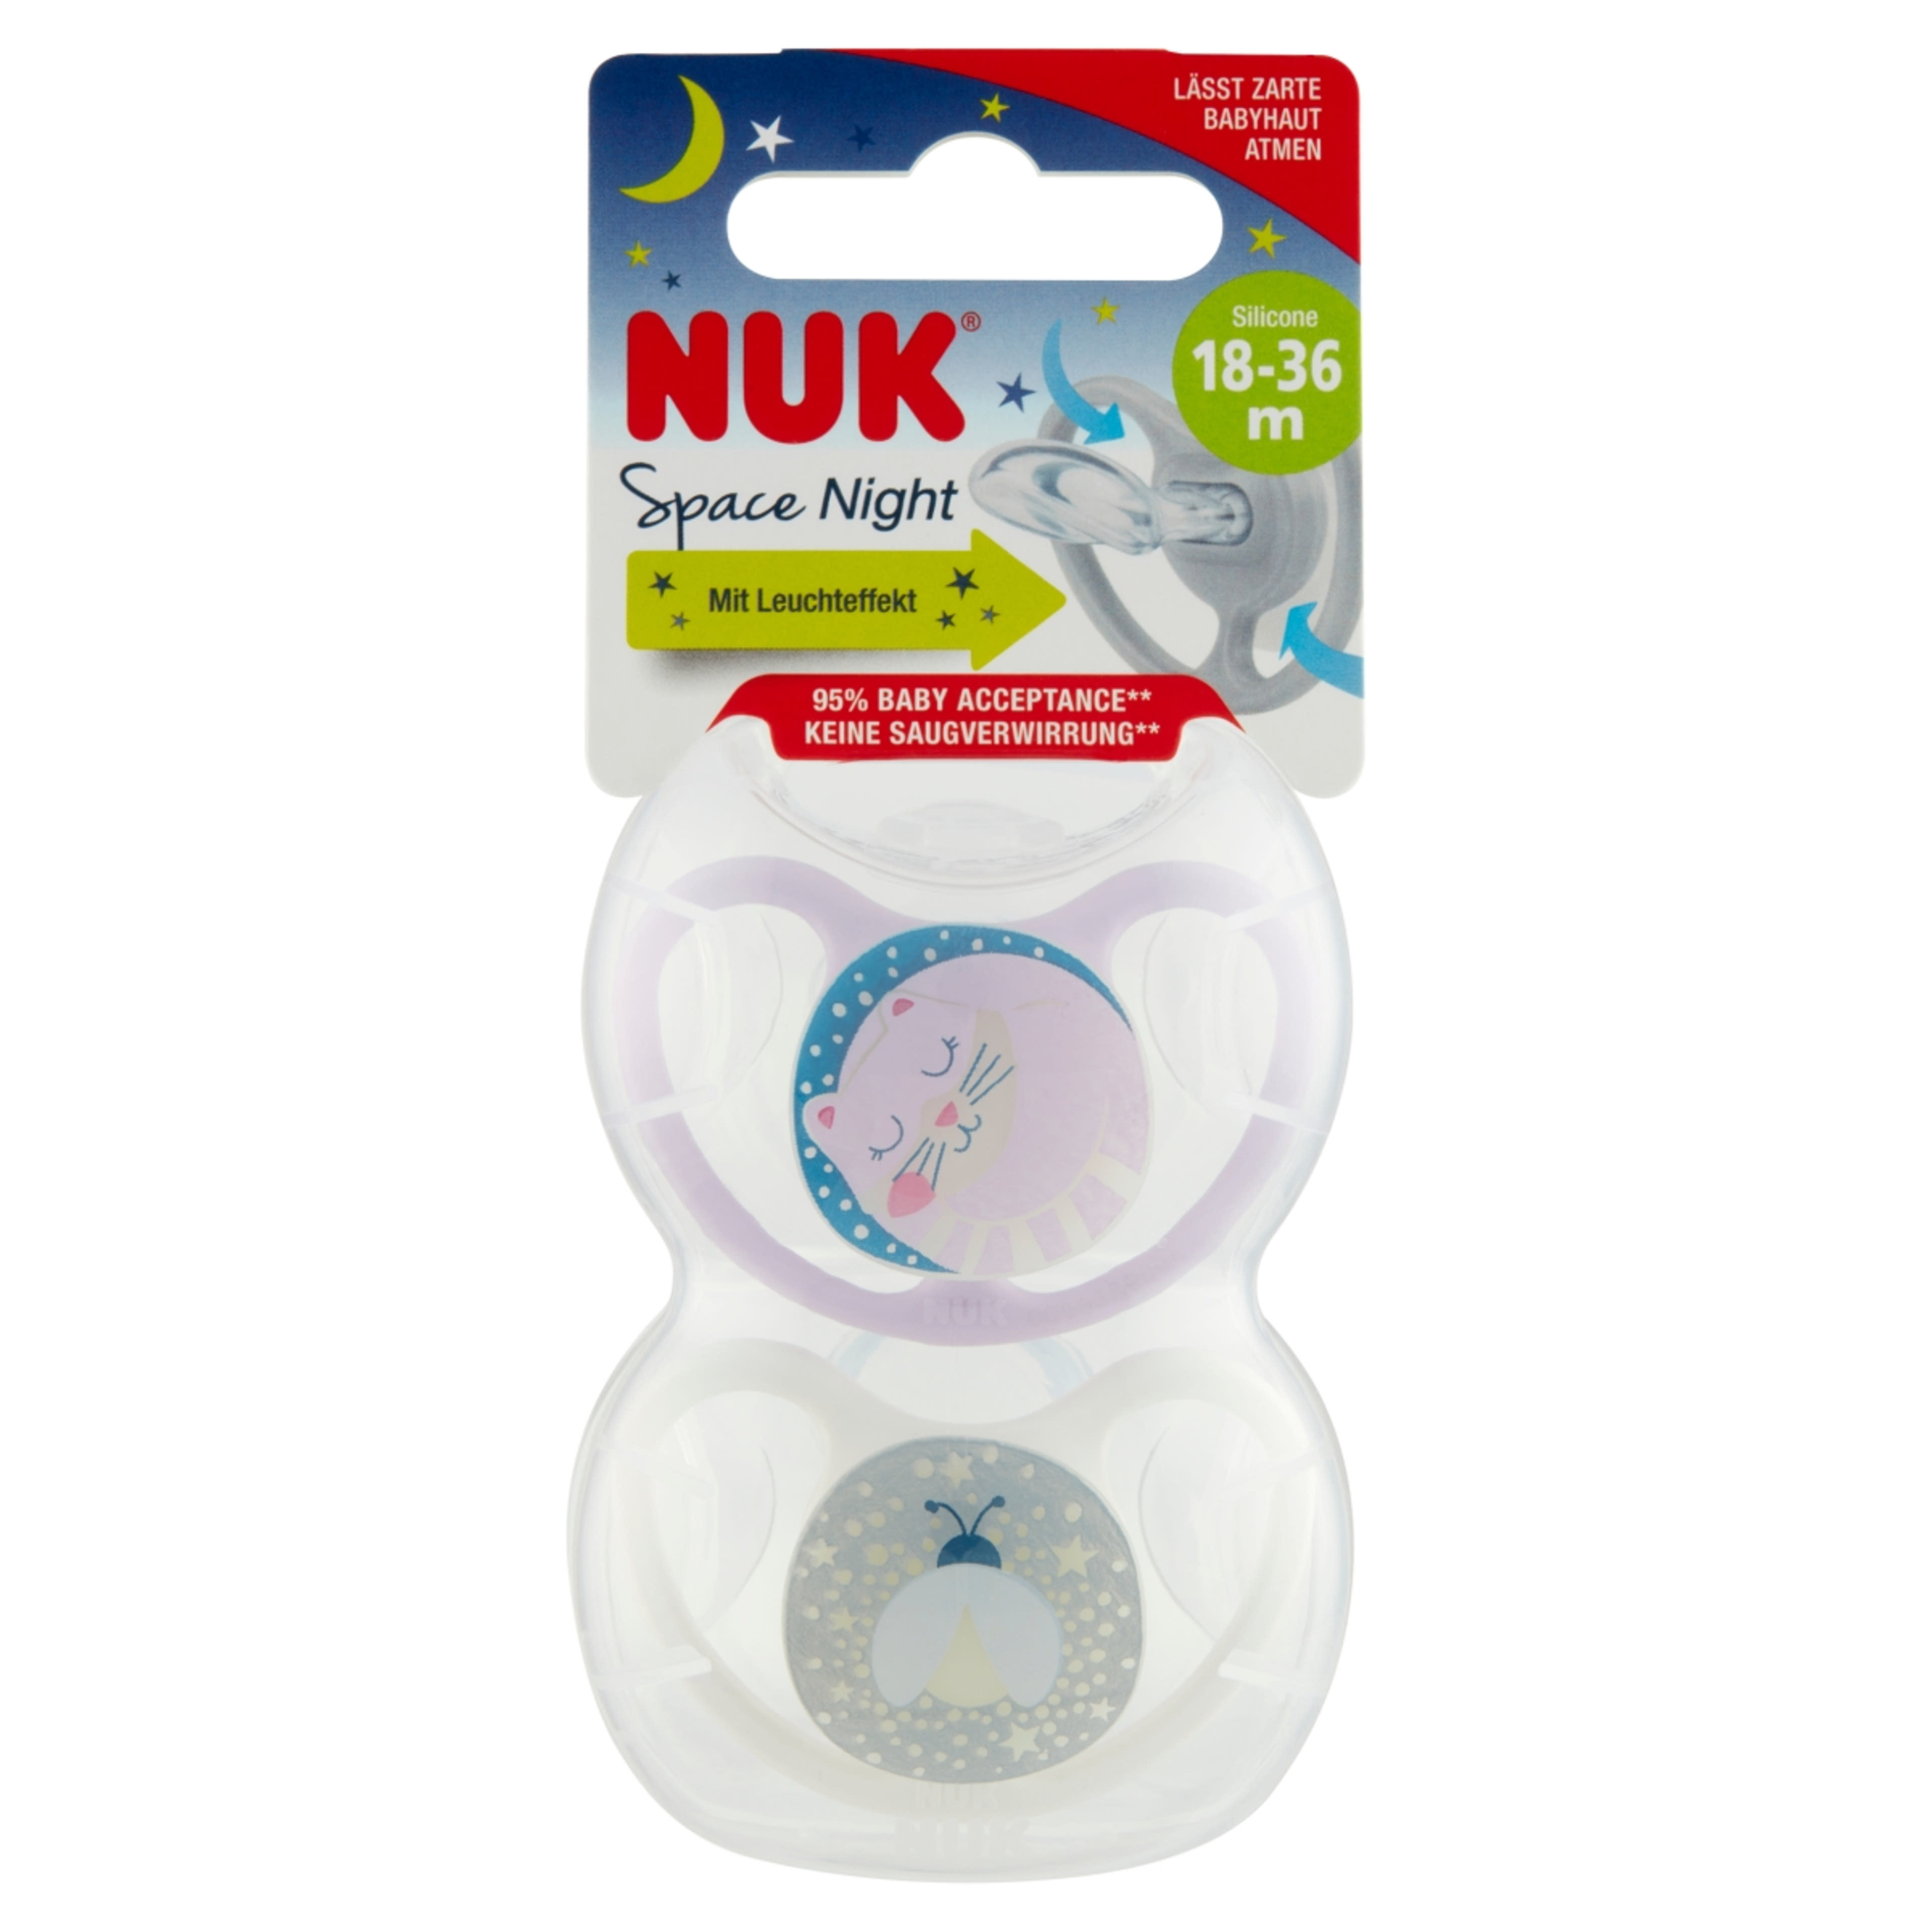 Nuk Space Night szilikon altatócumi, 18-36 hónapos korig, lány - 2 db